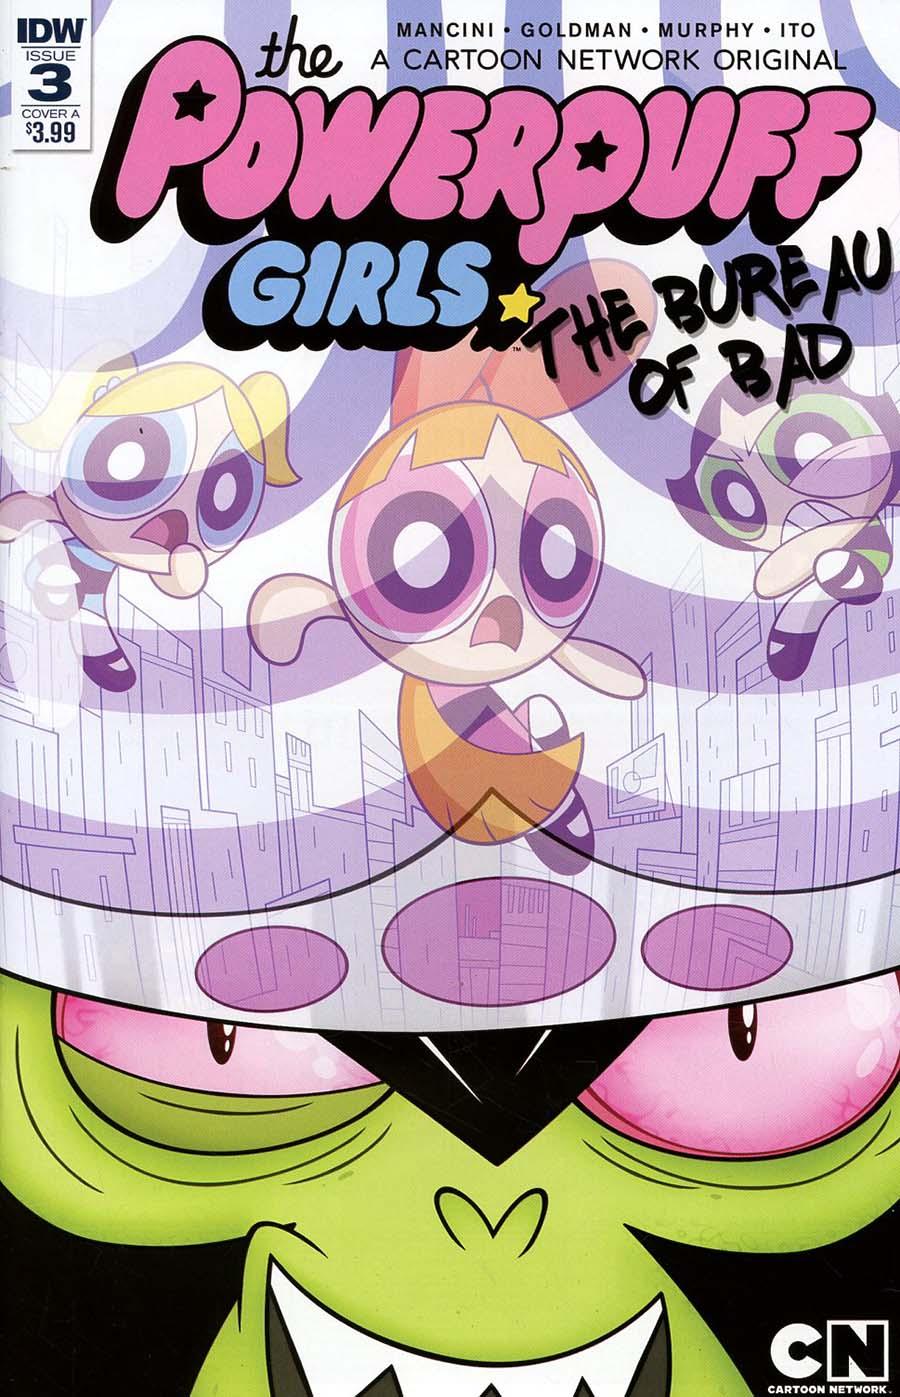 Powerpuff Girls Bureau Of Bad Vol. 1 #3